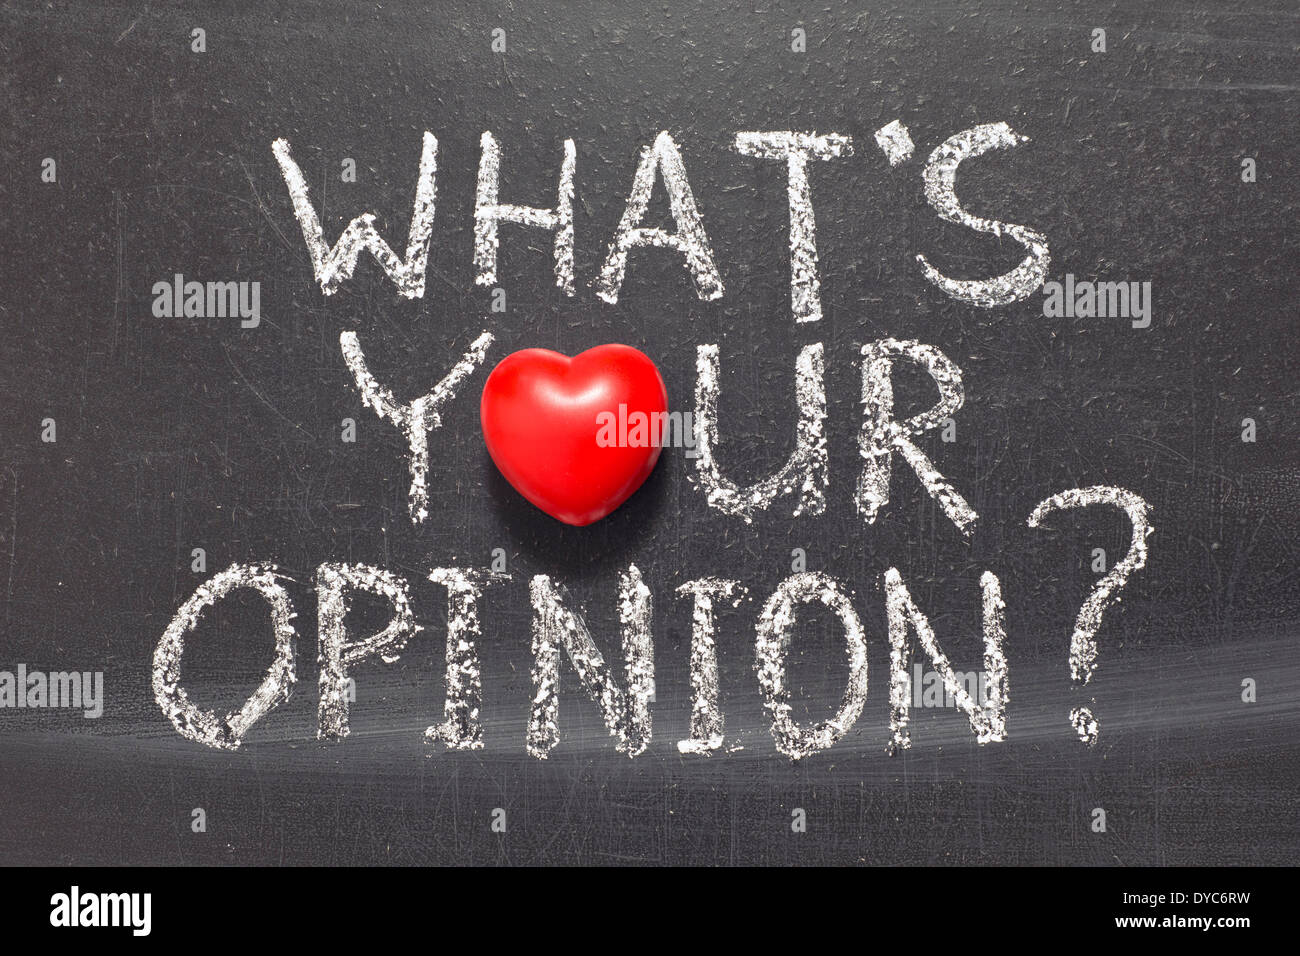 whats your opinion question handwritten on school blackboard Stock Photo